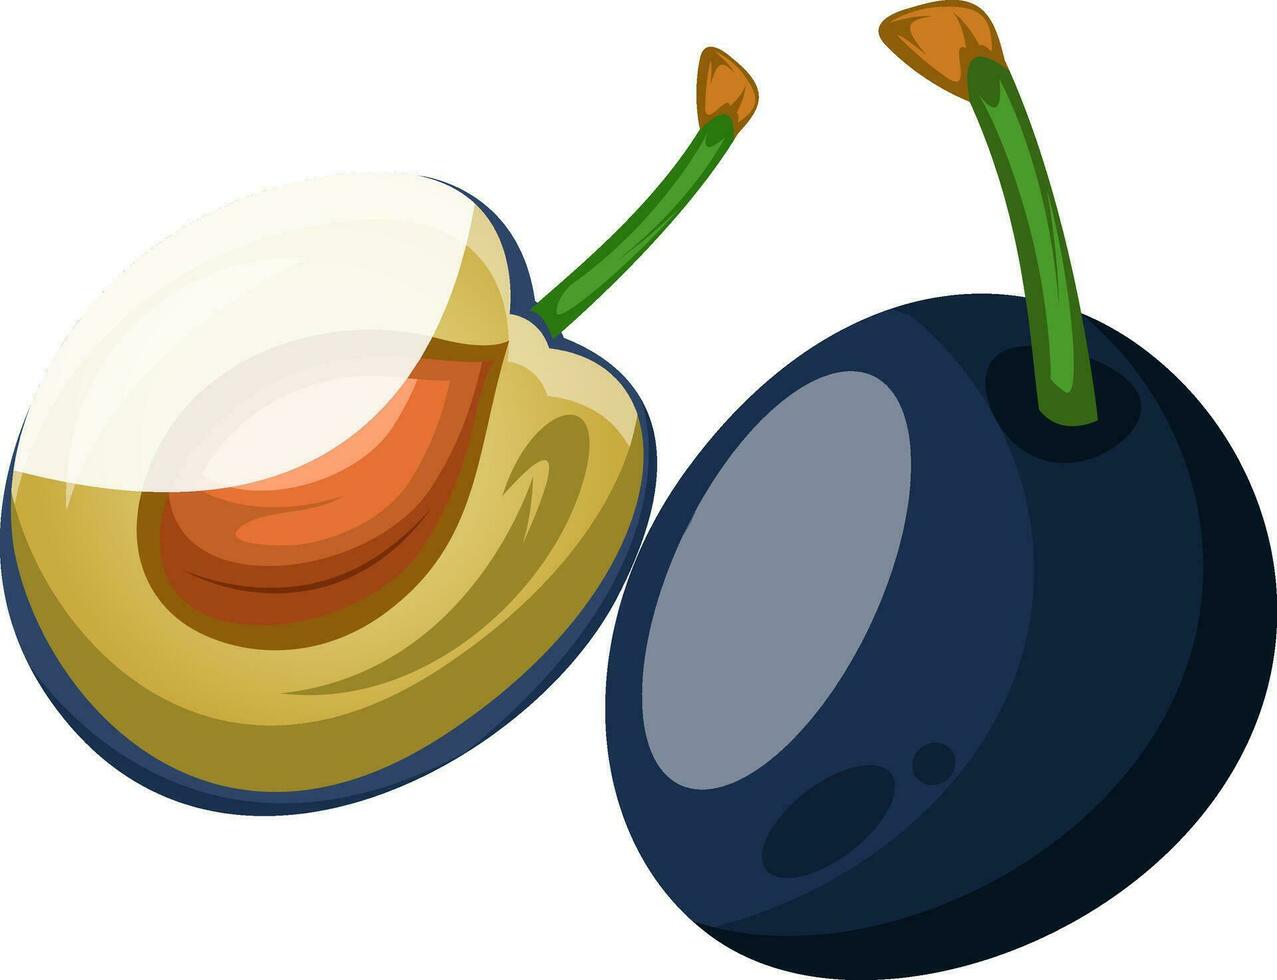 Blue damson plum cut in half cartoon fruit vector illustration on white background.